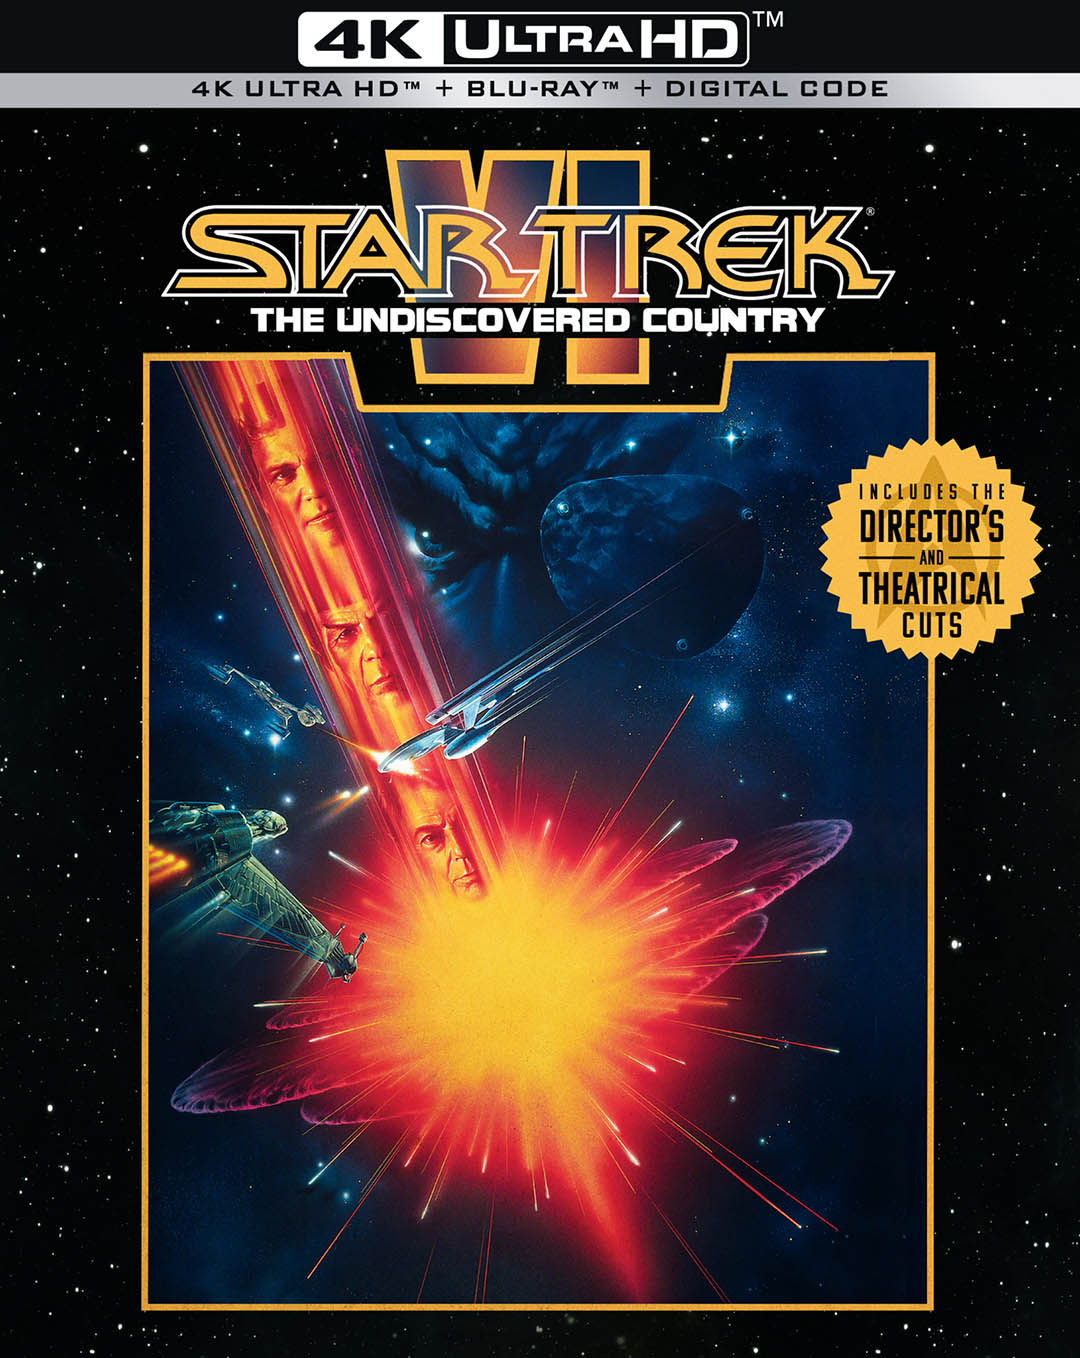 Star Trek VI The Undiscovered Country 4k Blu-ray